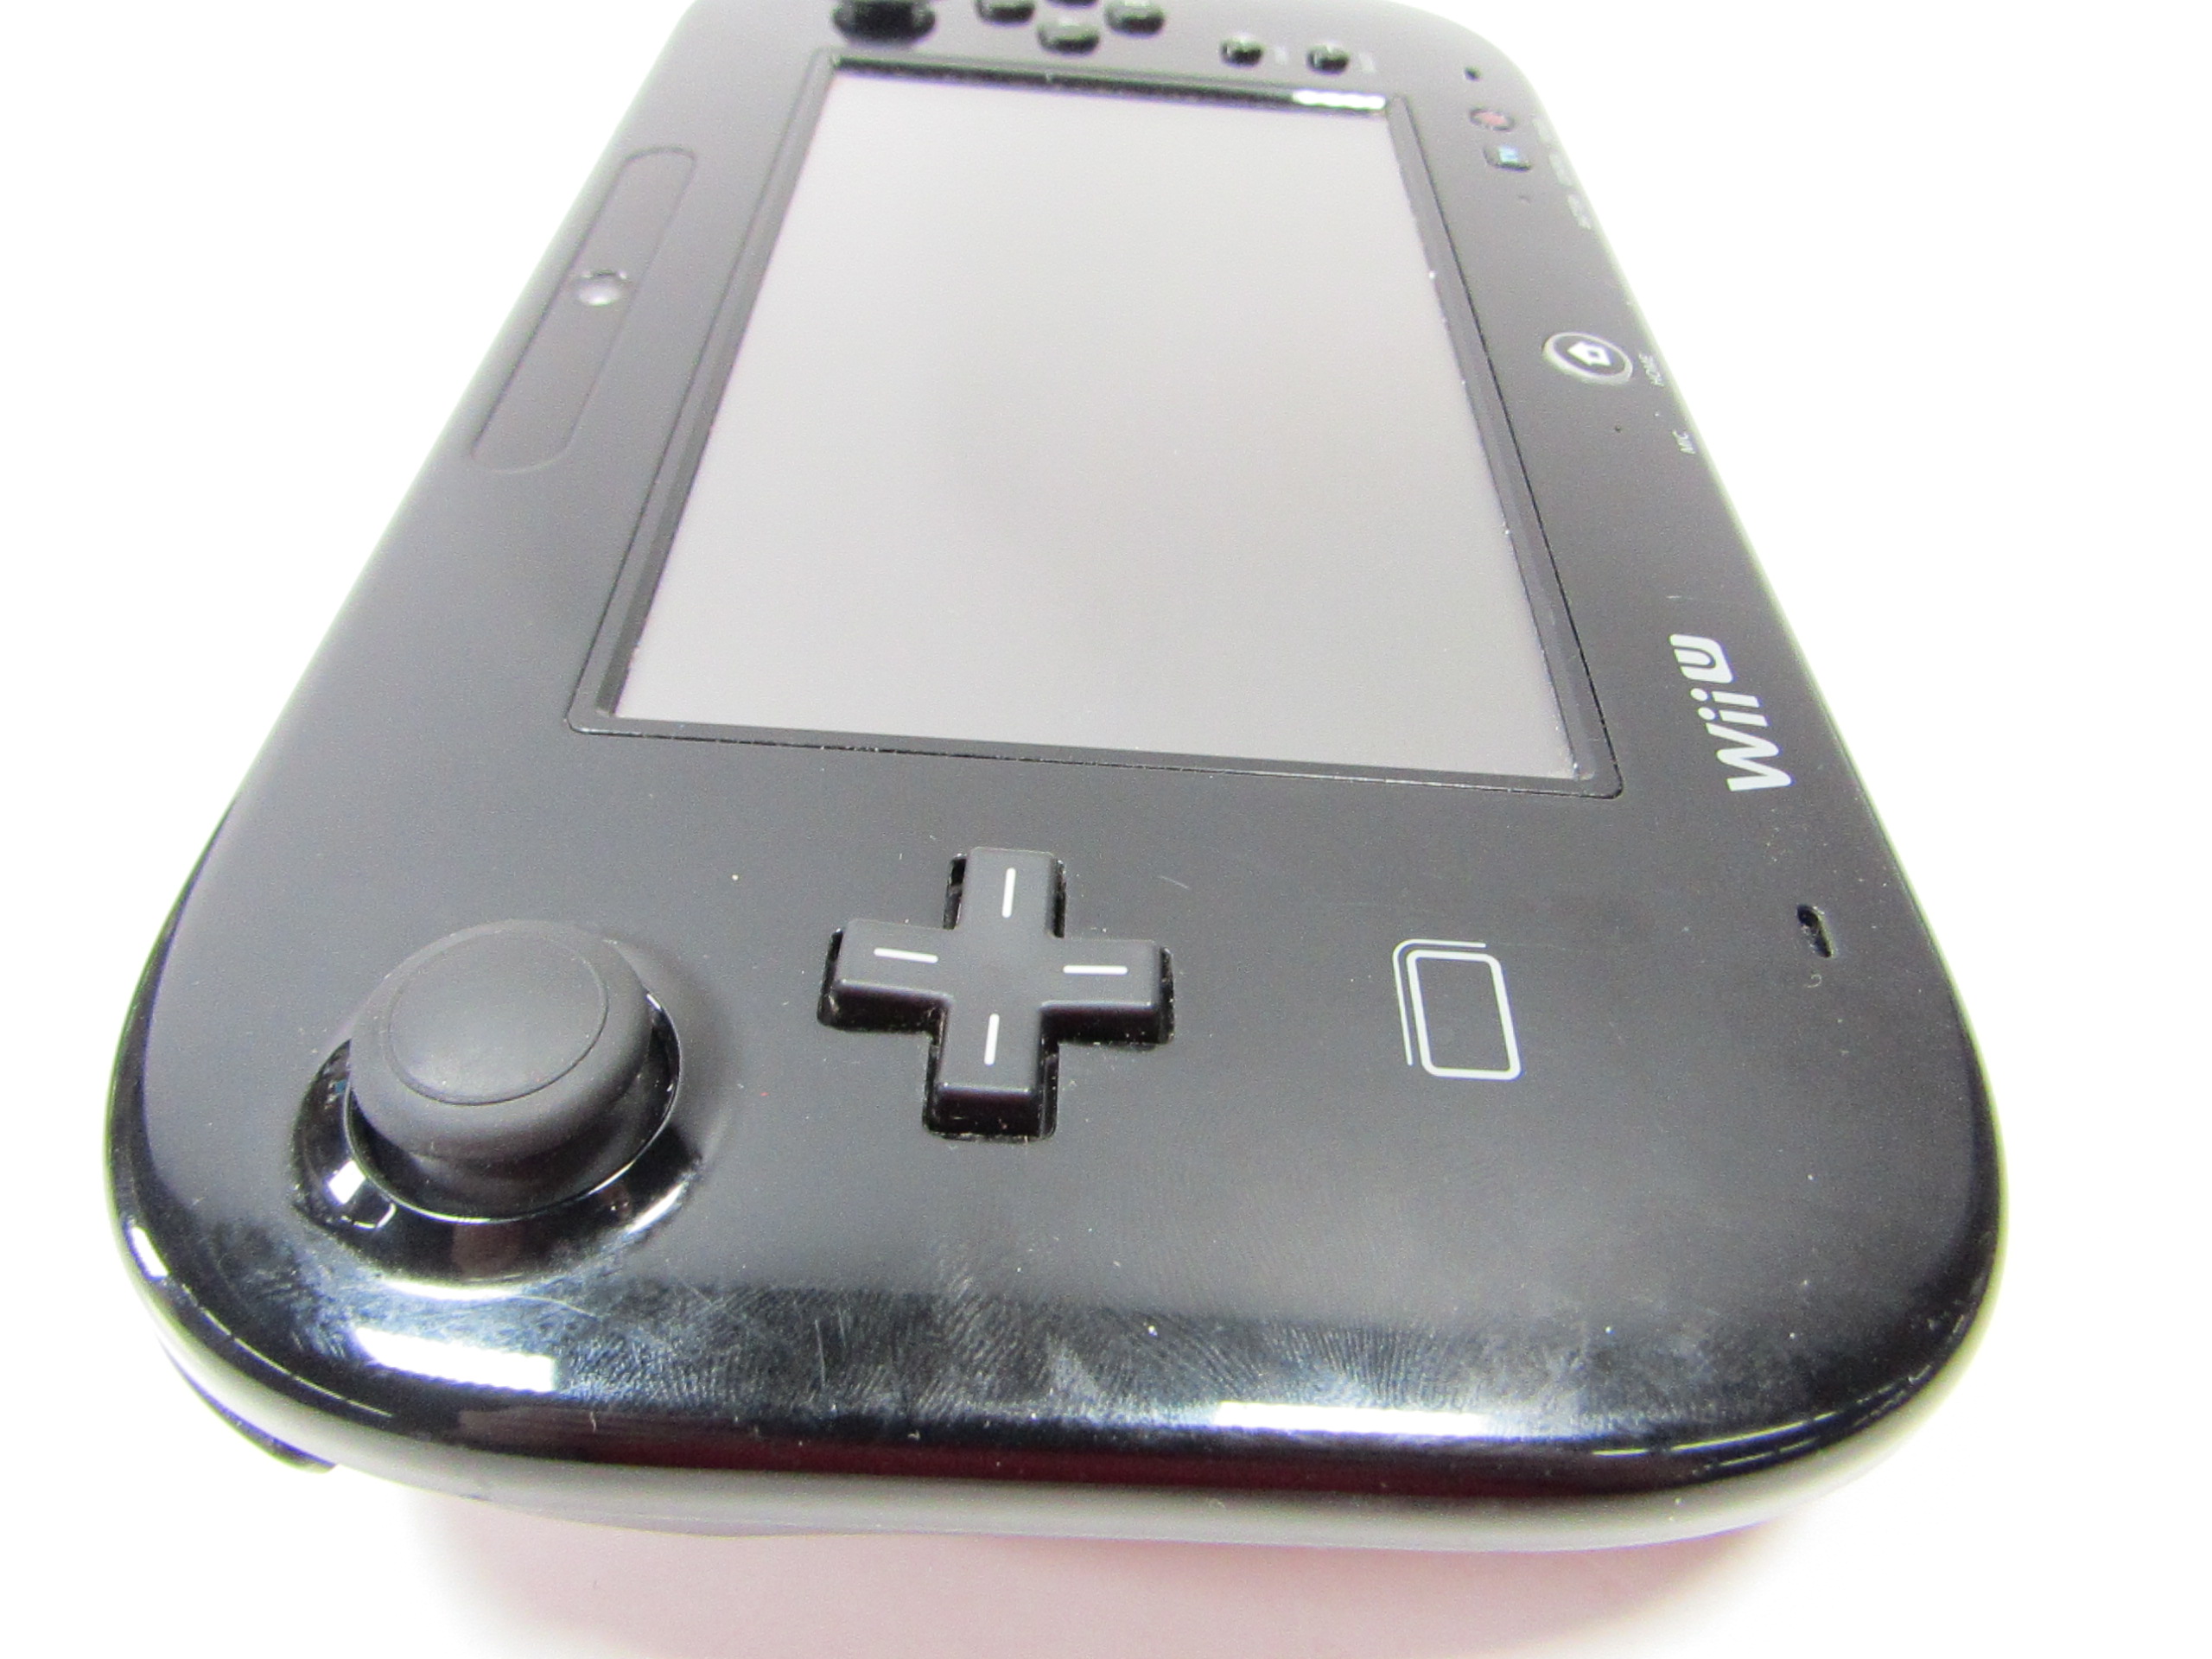 Best Buy: Nintendo Nintendo Wii U Console Basic Set WUPSWAAB